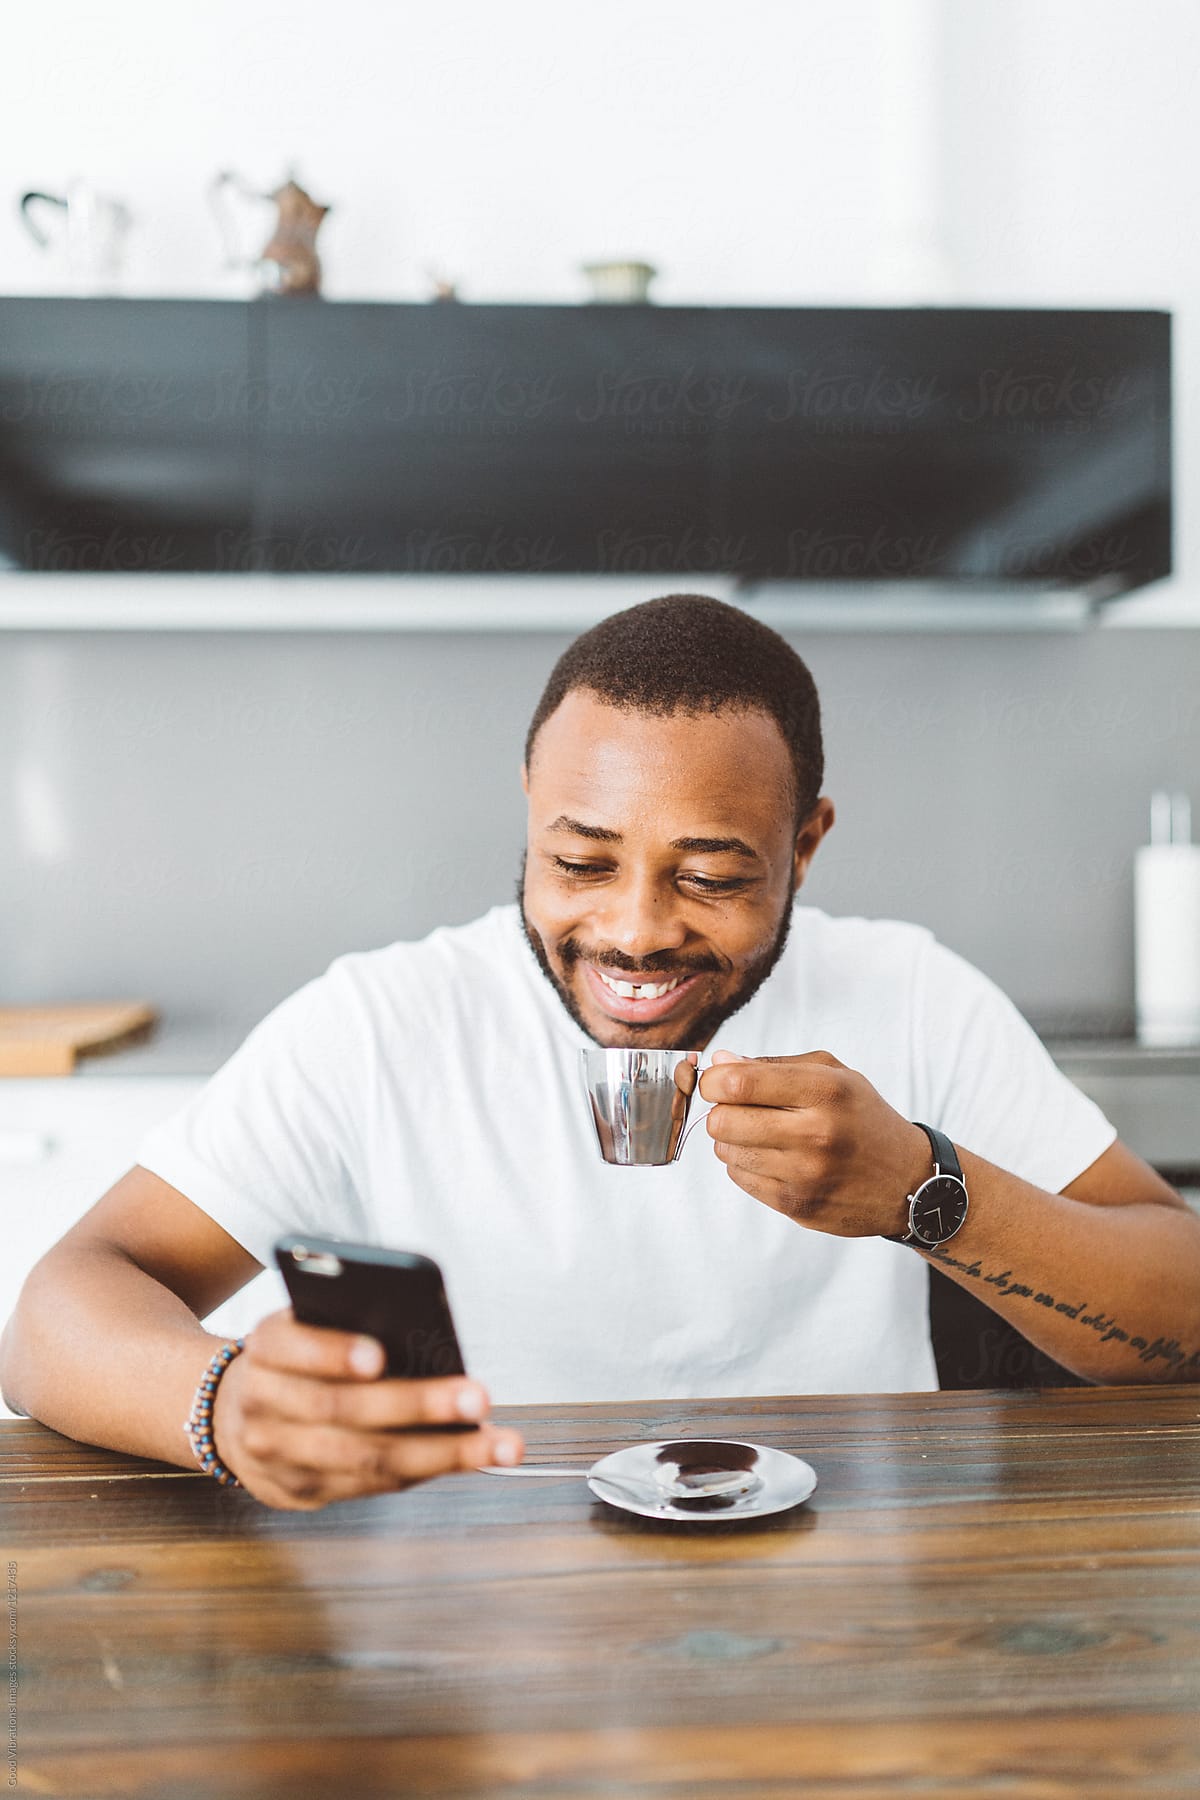 Smiling man drinks coffee and checks phone